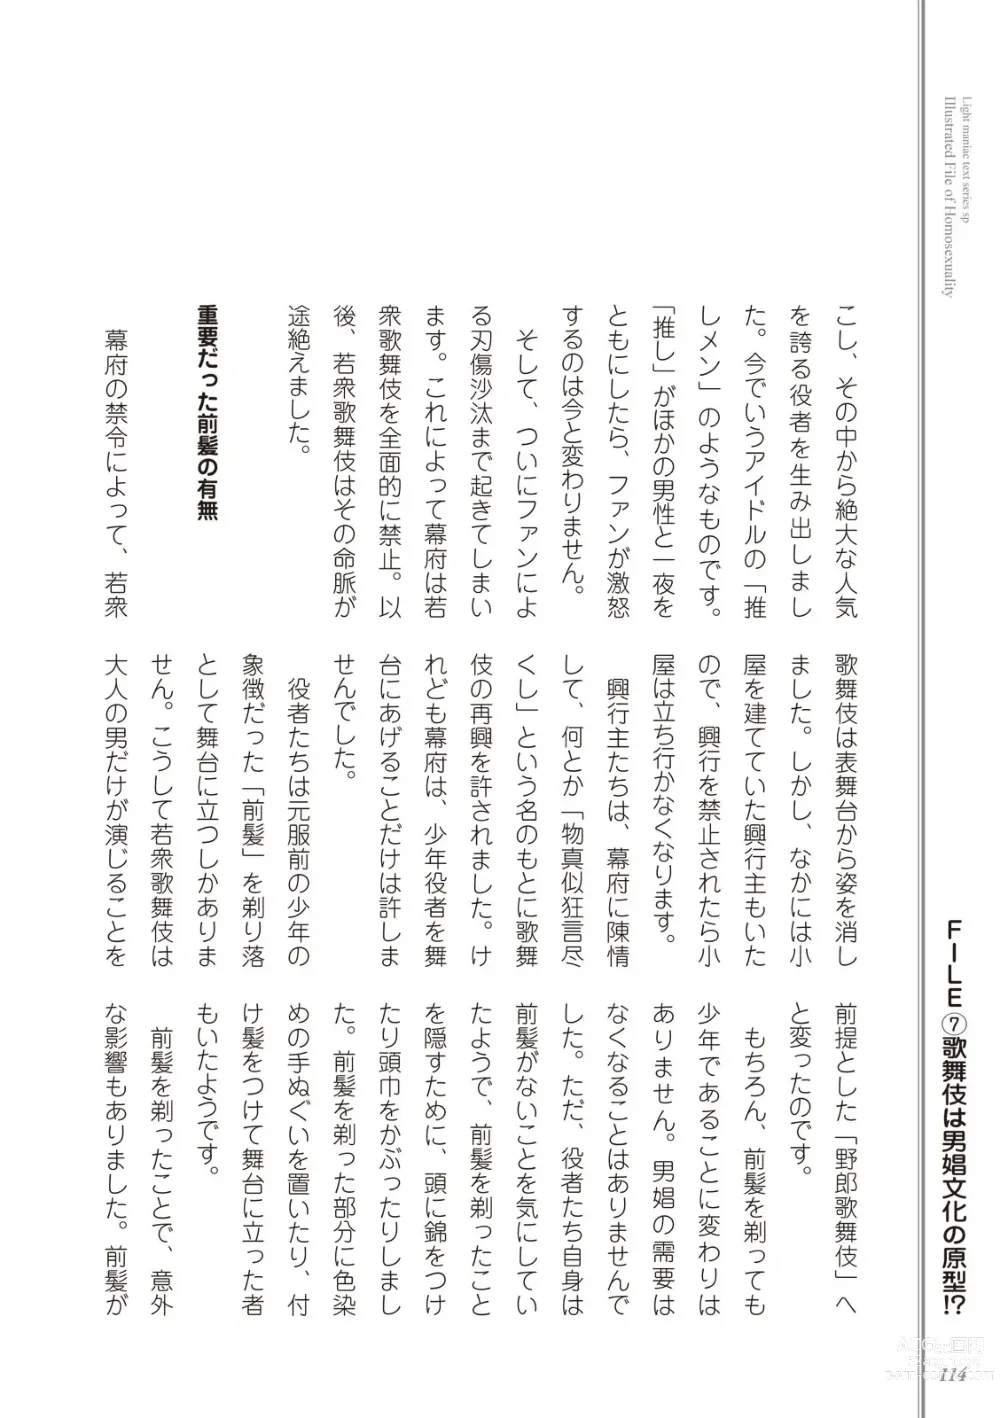 Page 116 of manga Kusa no Rekishi o Atsumete Mairimashita.  Oosame Kudasai - Light maniac text series sp Illustrated File of Homosexuality